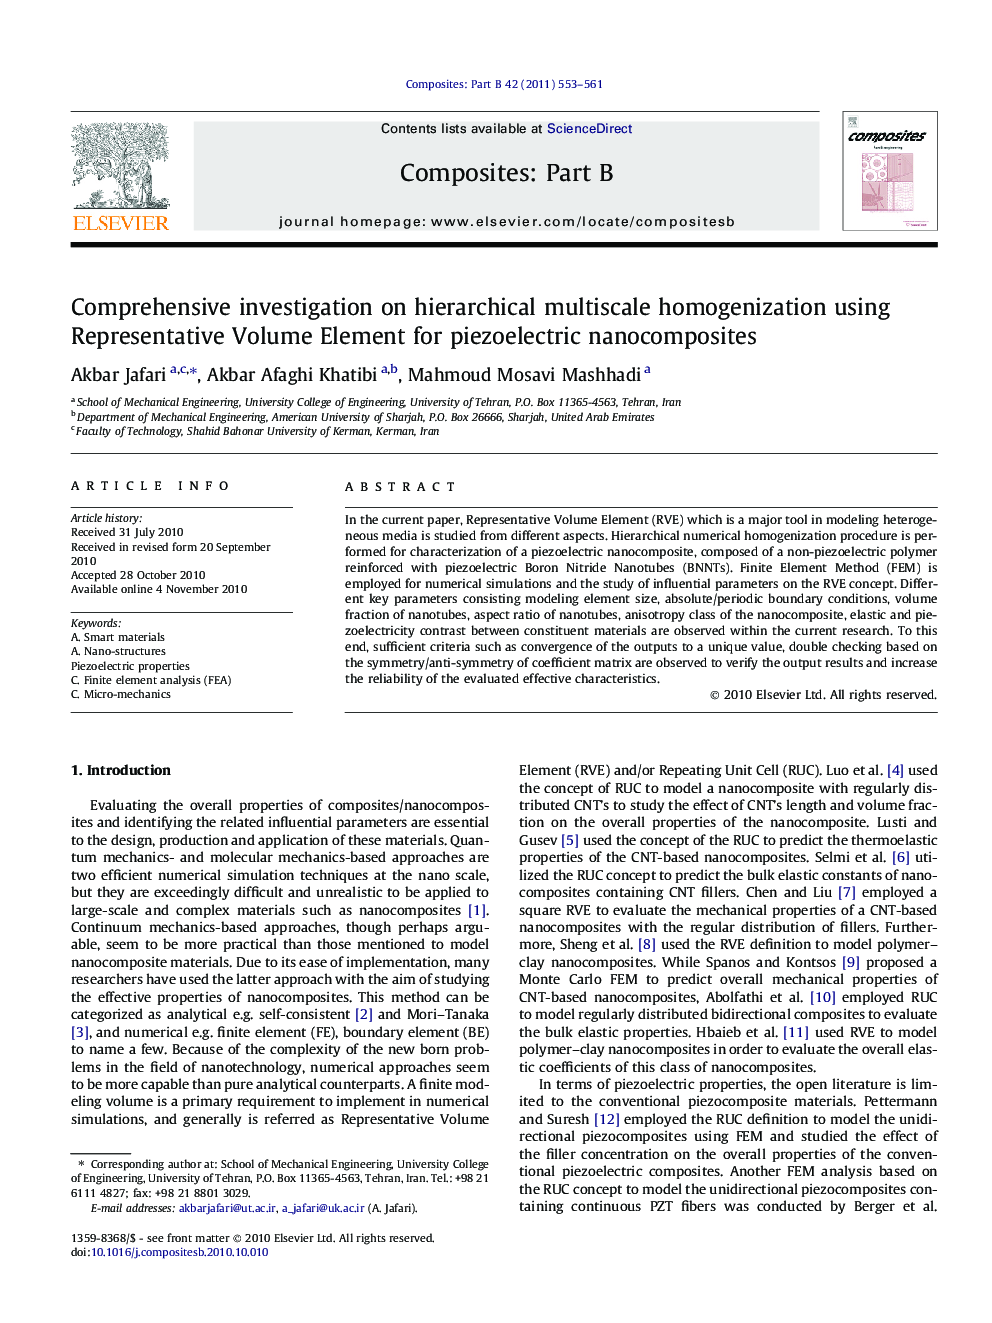 Comprehensive investigation on hierarchical multiscale homogenization using Representative Volume Element for piezoelectric nanocomposites